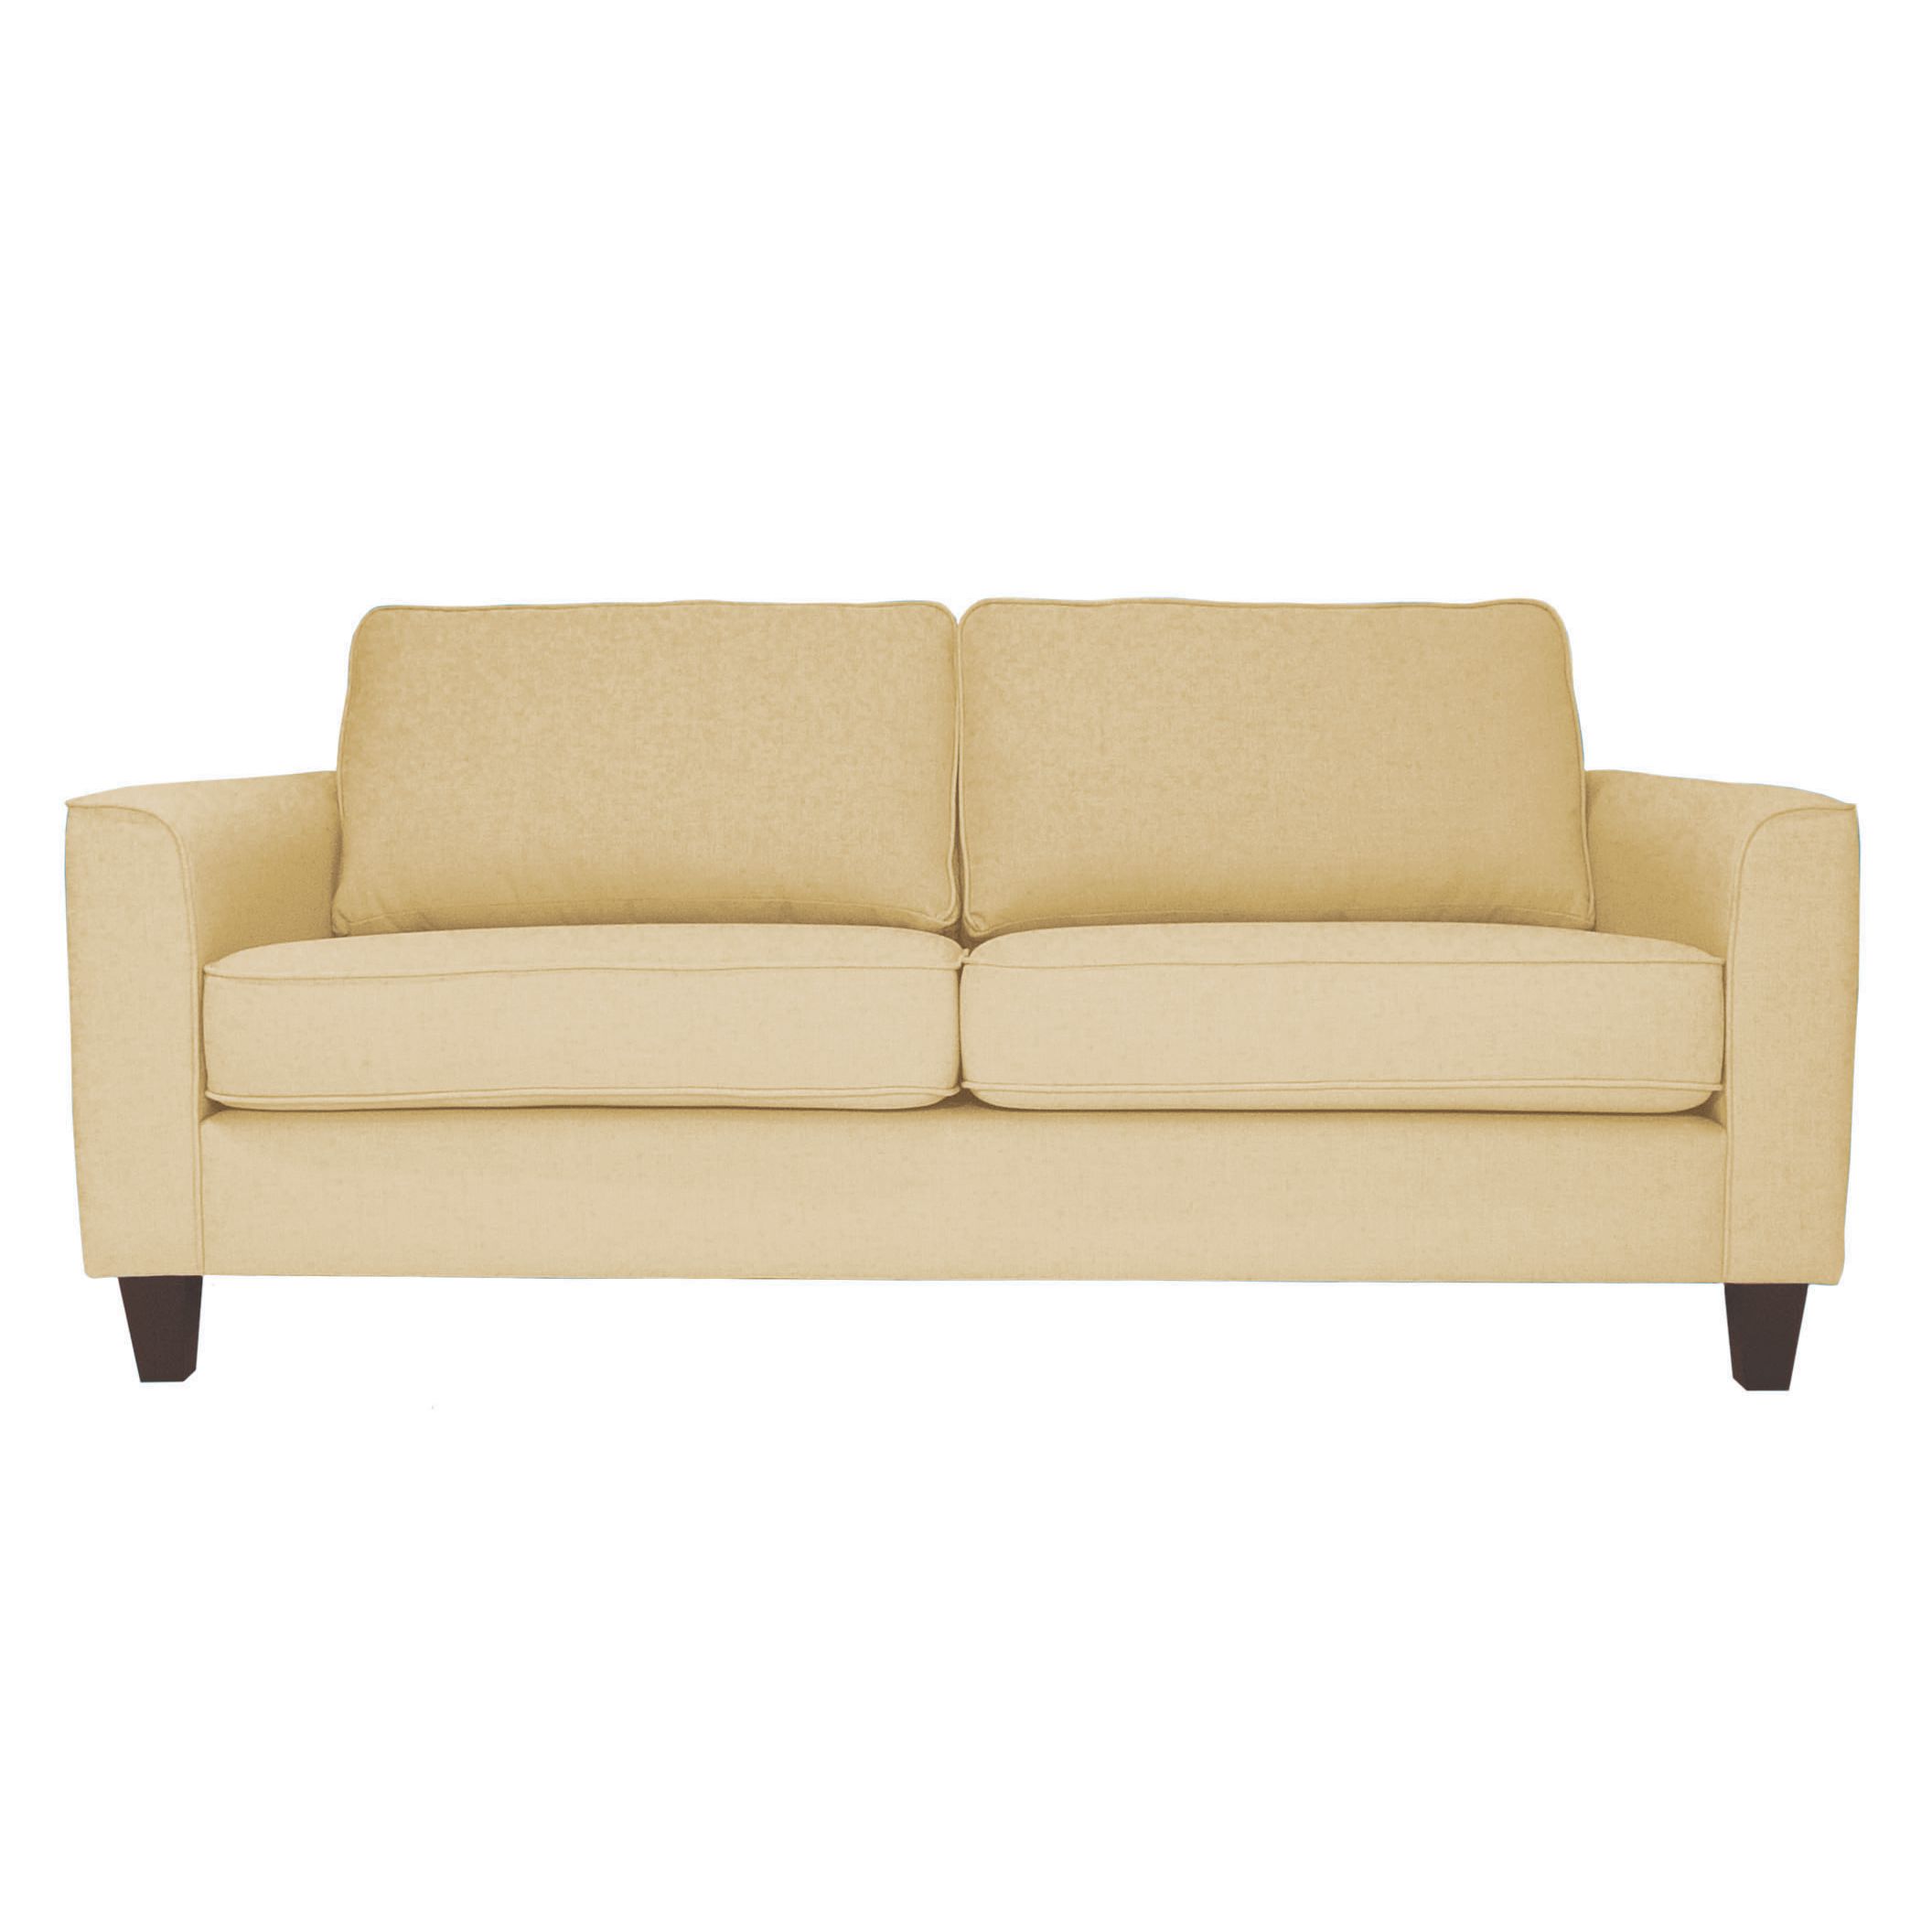 John Lewis Portia Medium Sofa, Camel / Dark Leg, width 183cm